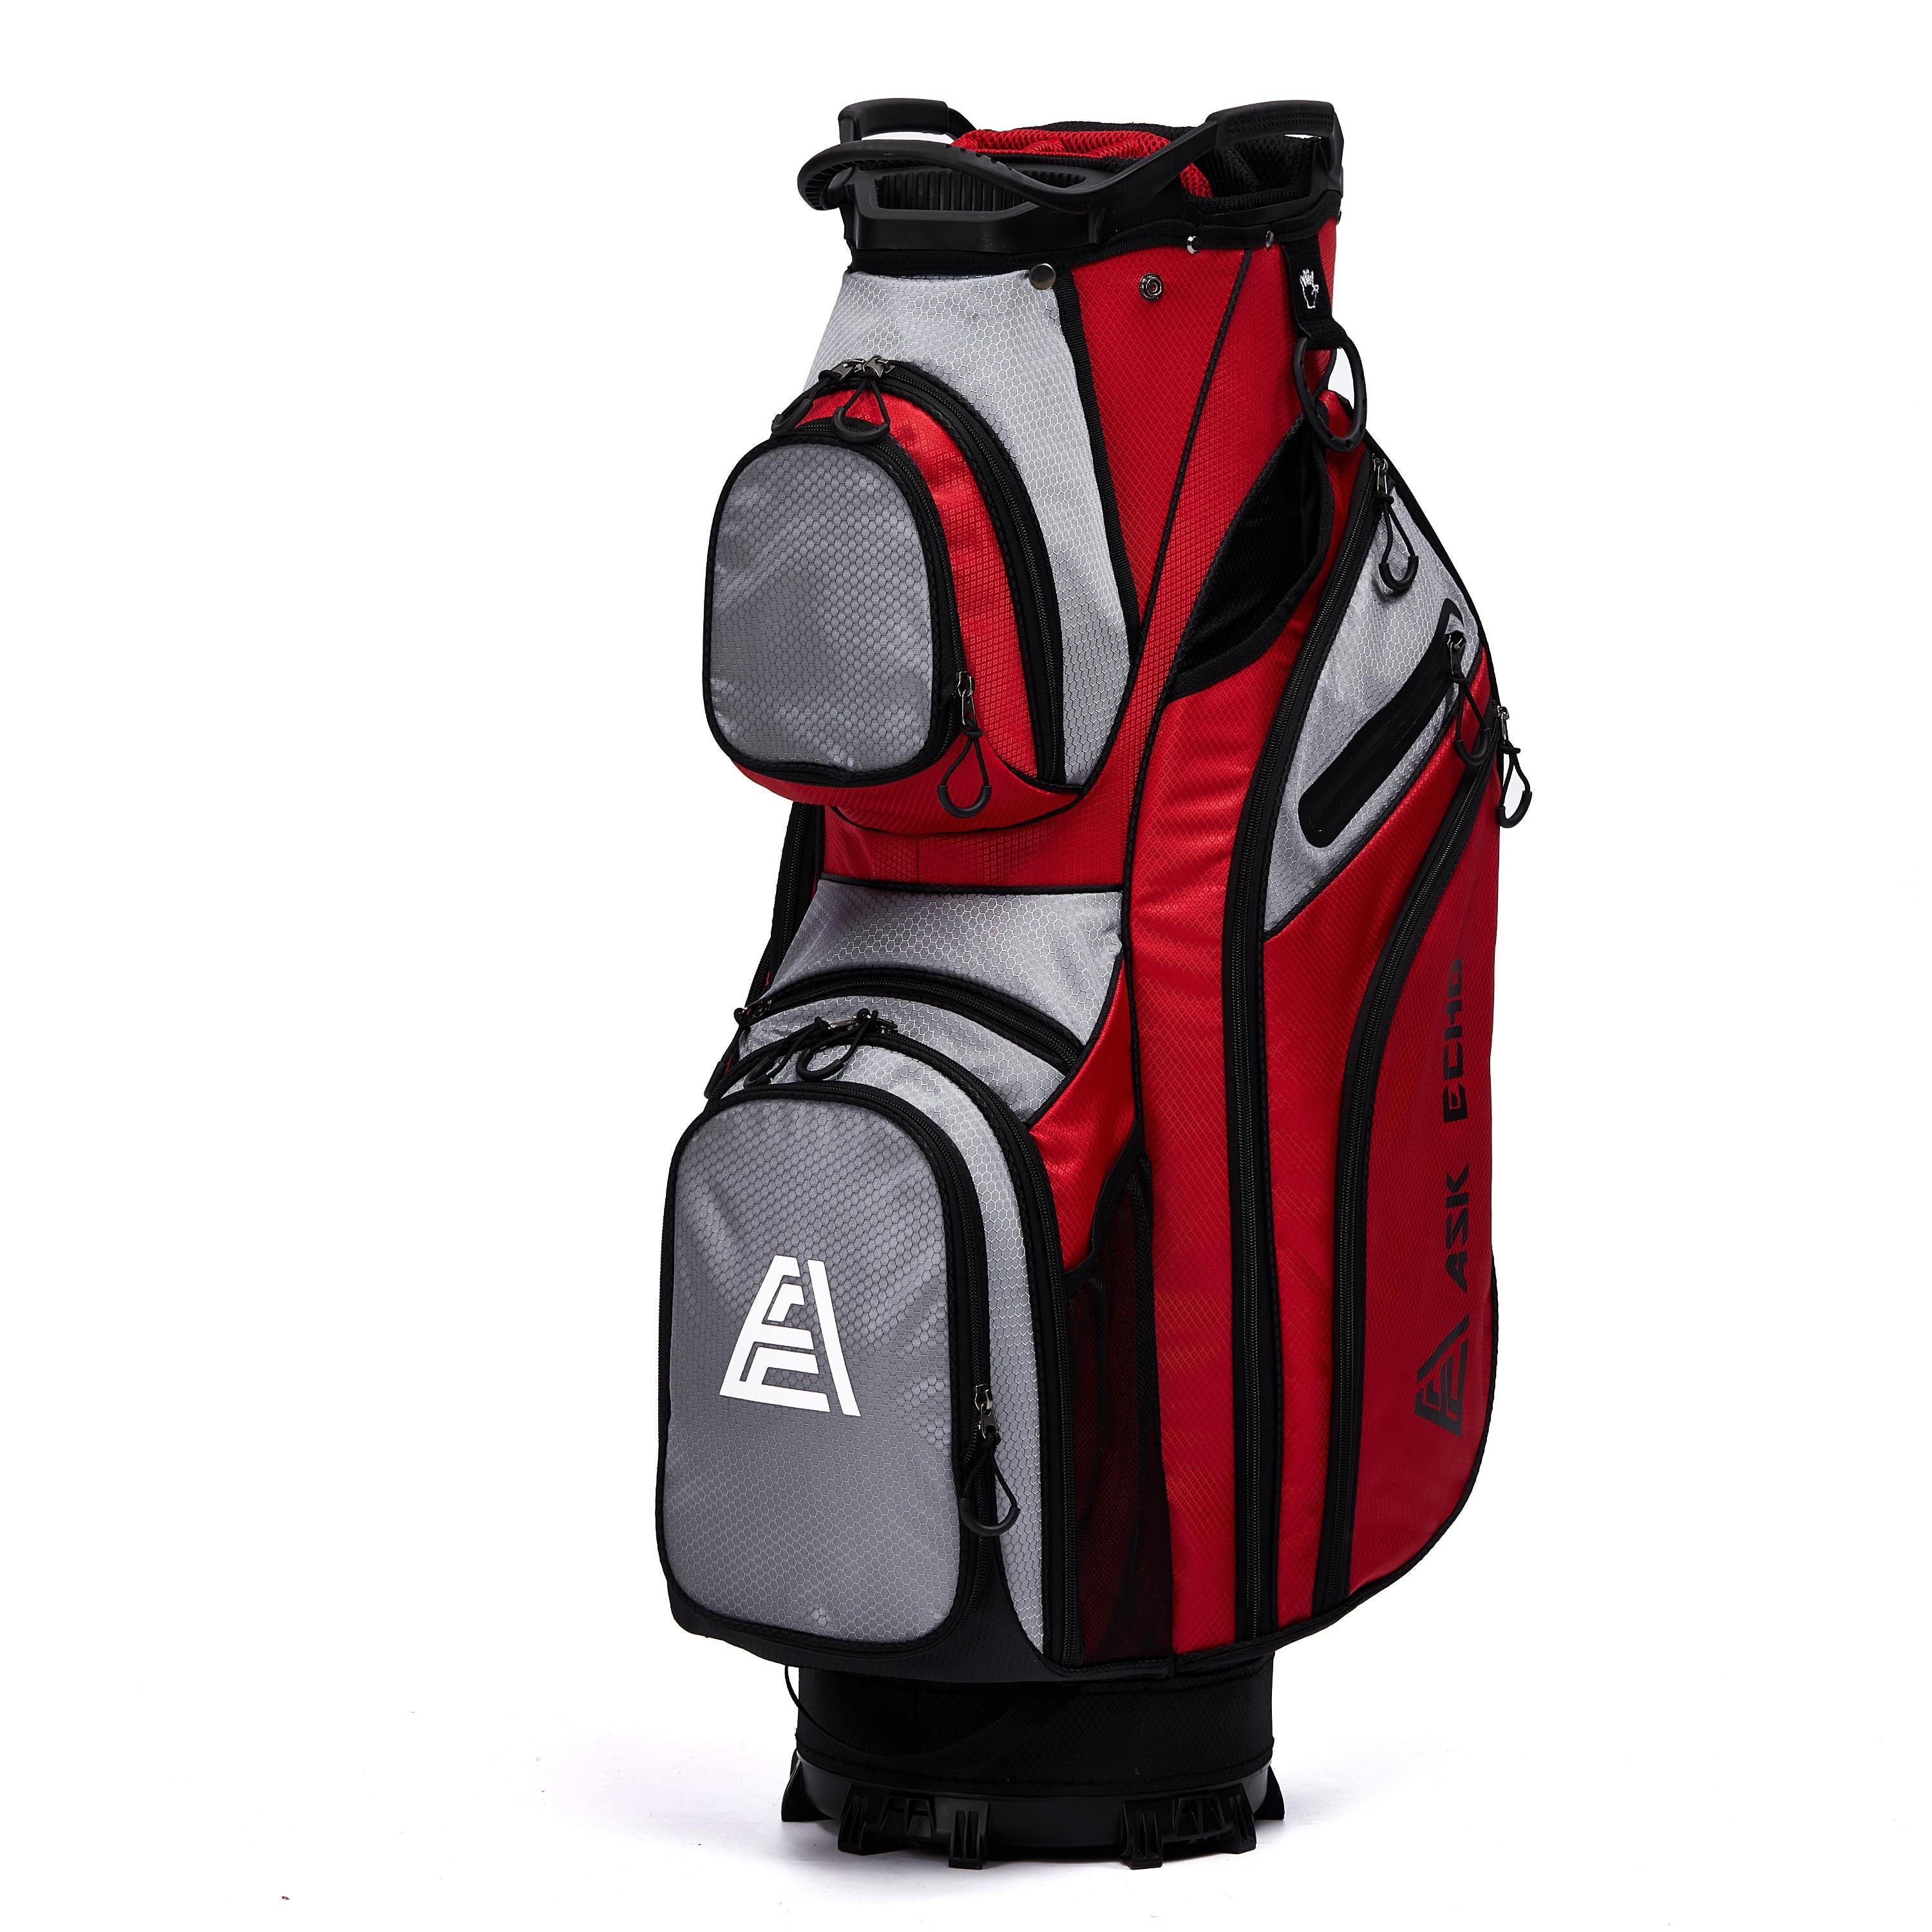 Ask Echo WINNER 2.0 15 Way Full Length Dividers Golf Organizer Cart Bag / Navy